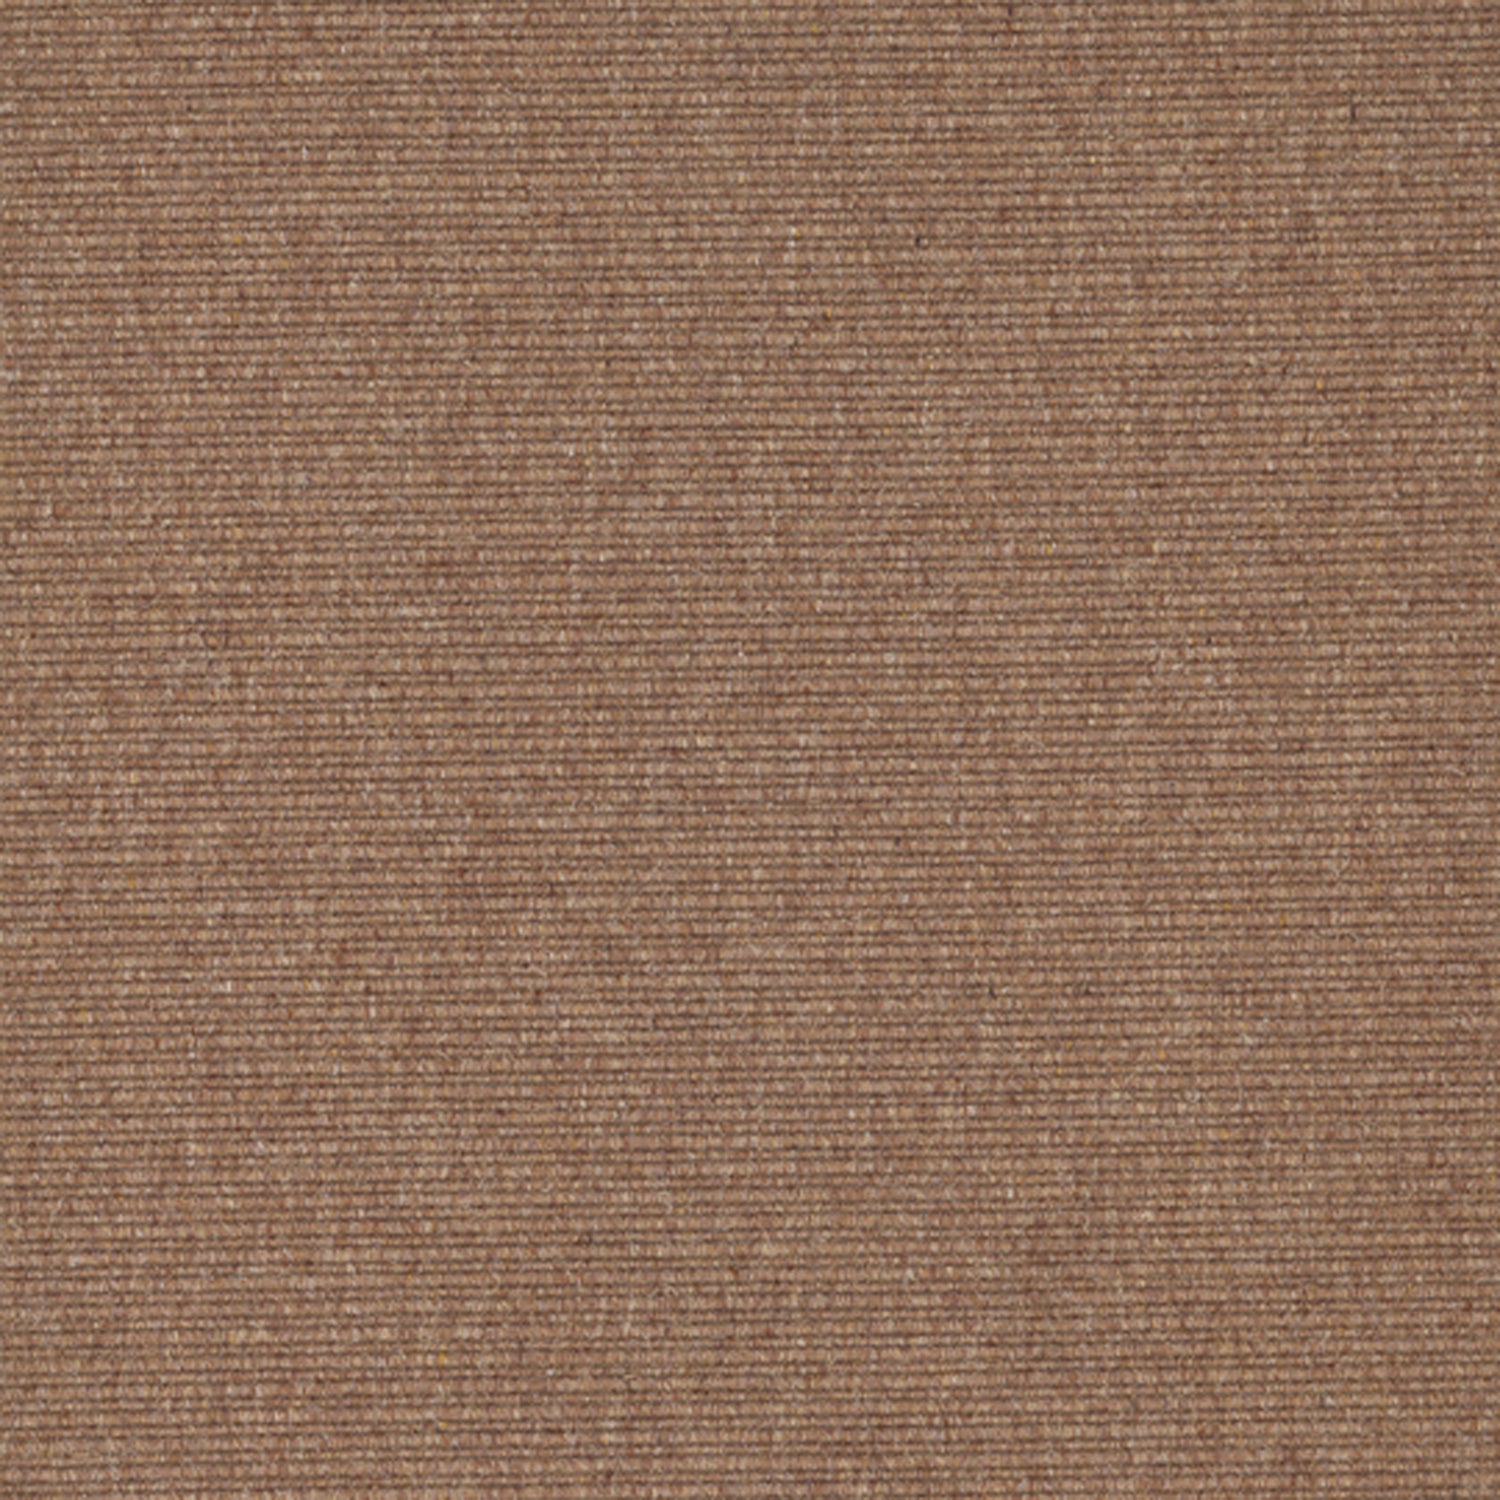 Wool broadloom carpet swatch in a ribbed weave in chestnut.